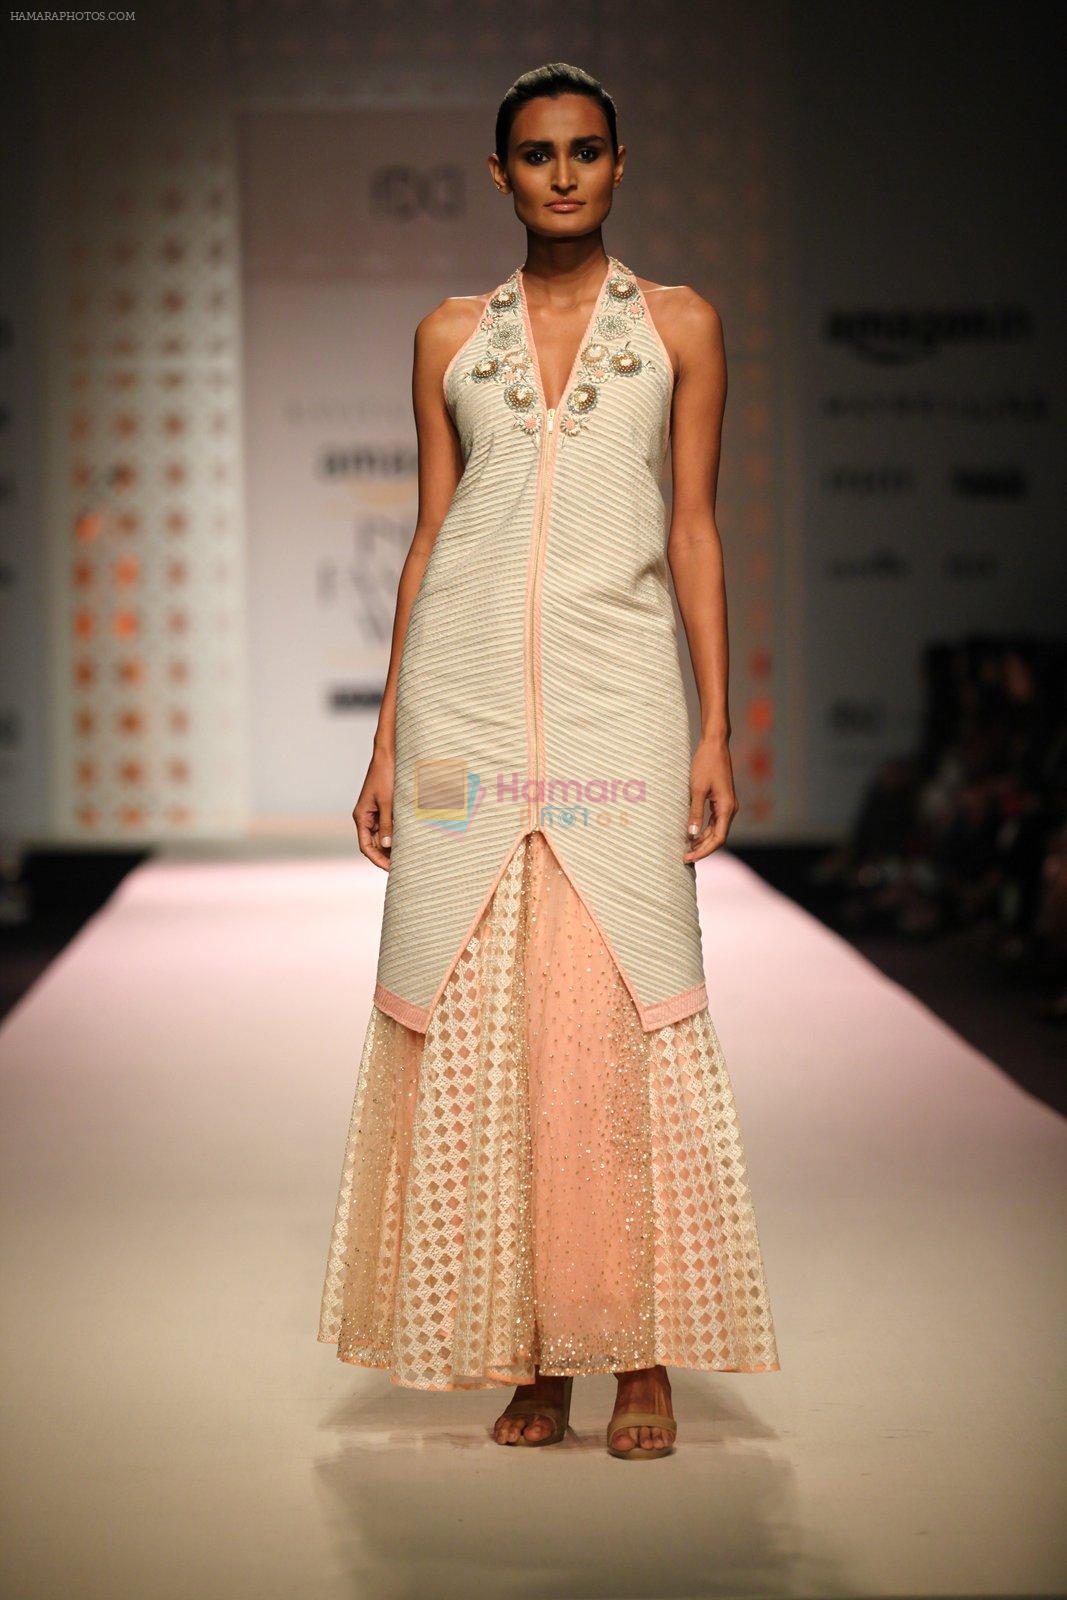 Model walk the ramp for Kavita Bhartia on day 1 of Amazon india fashion week on 7th Oct 2015